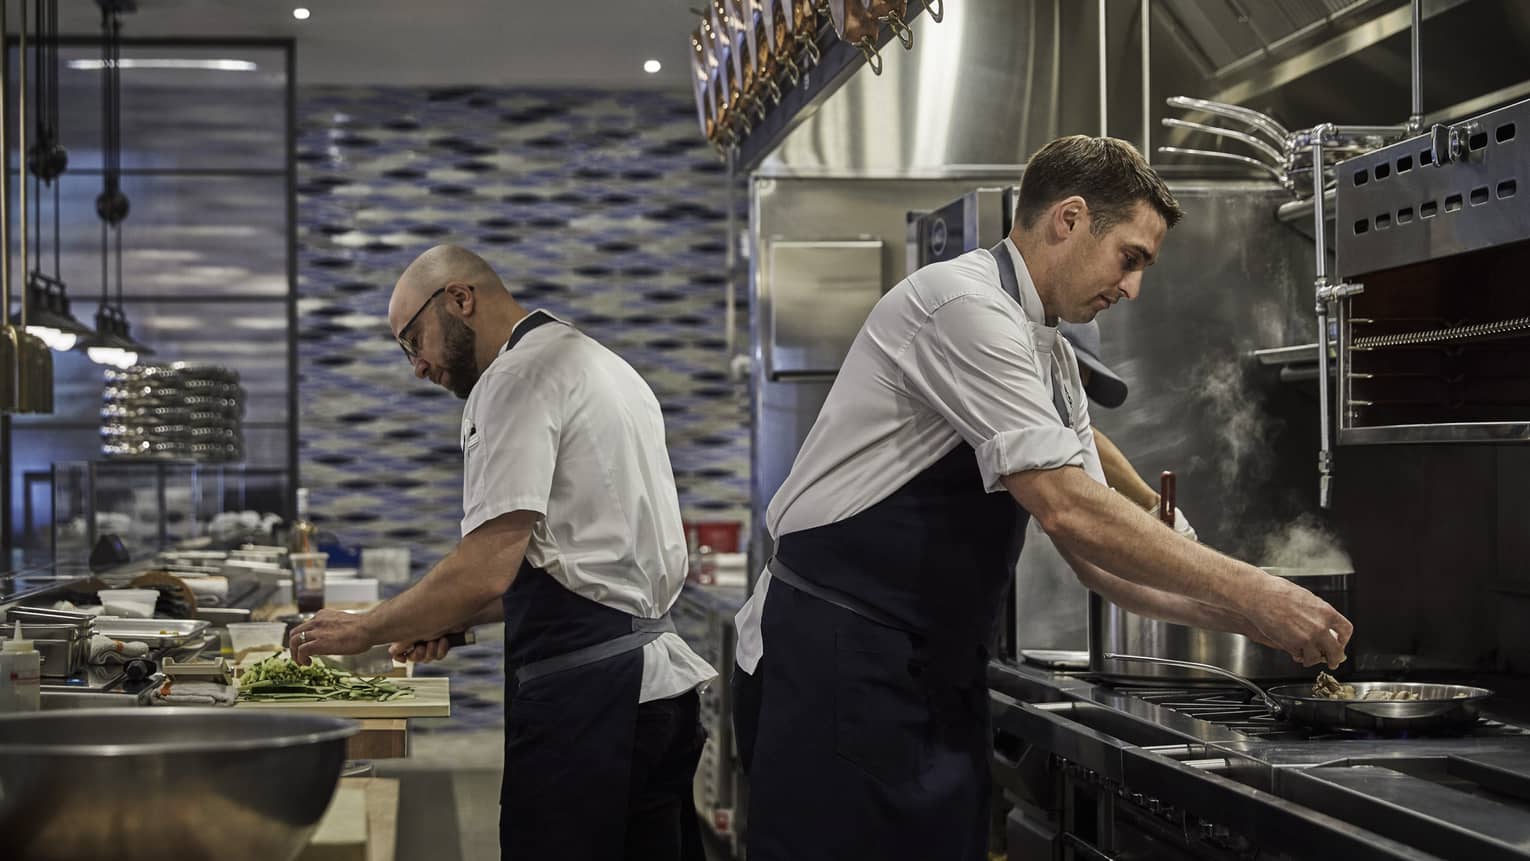 Chefs prepare meals in the kitchen of Four Seasons Philadelphia